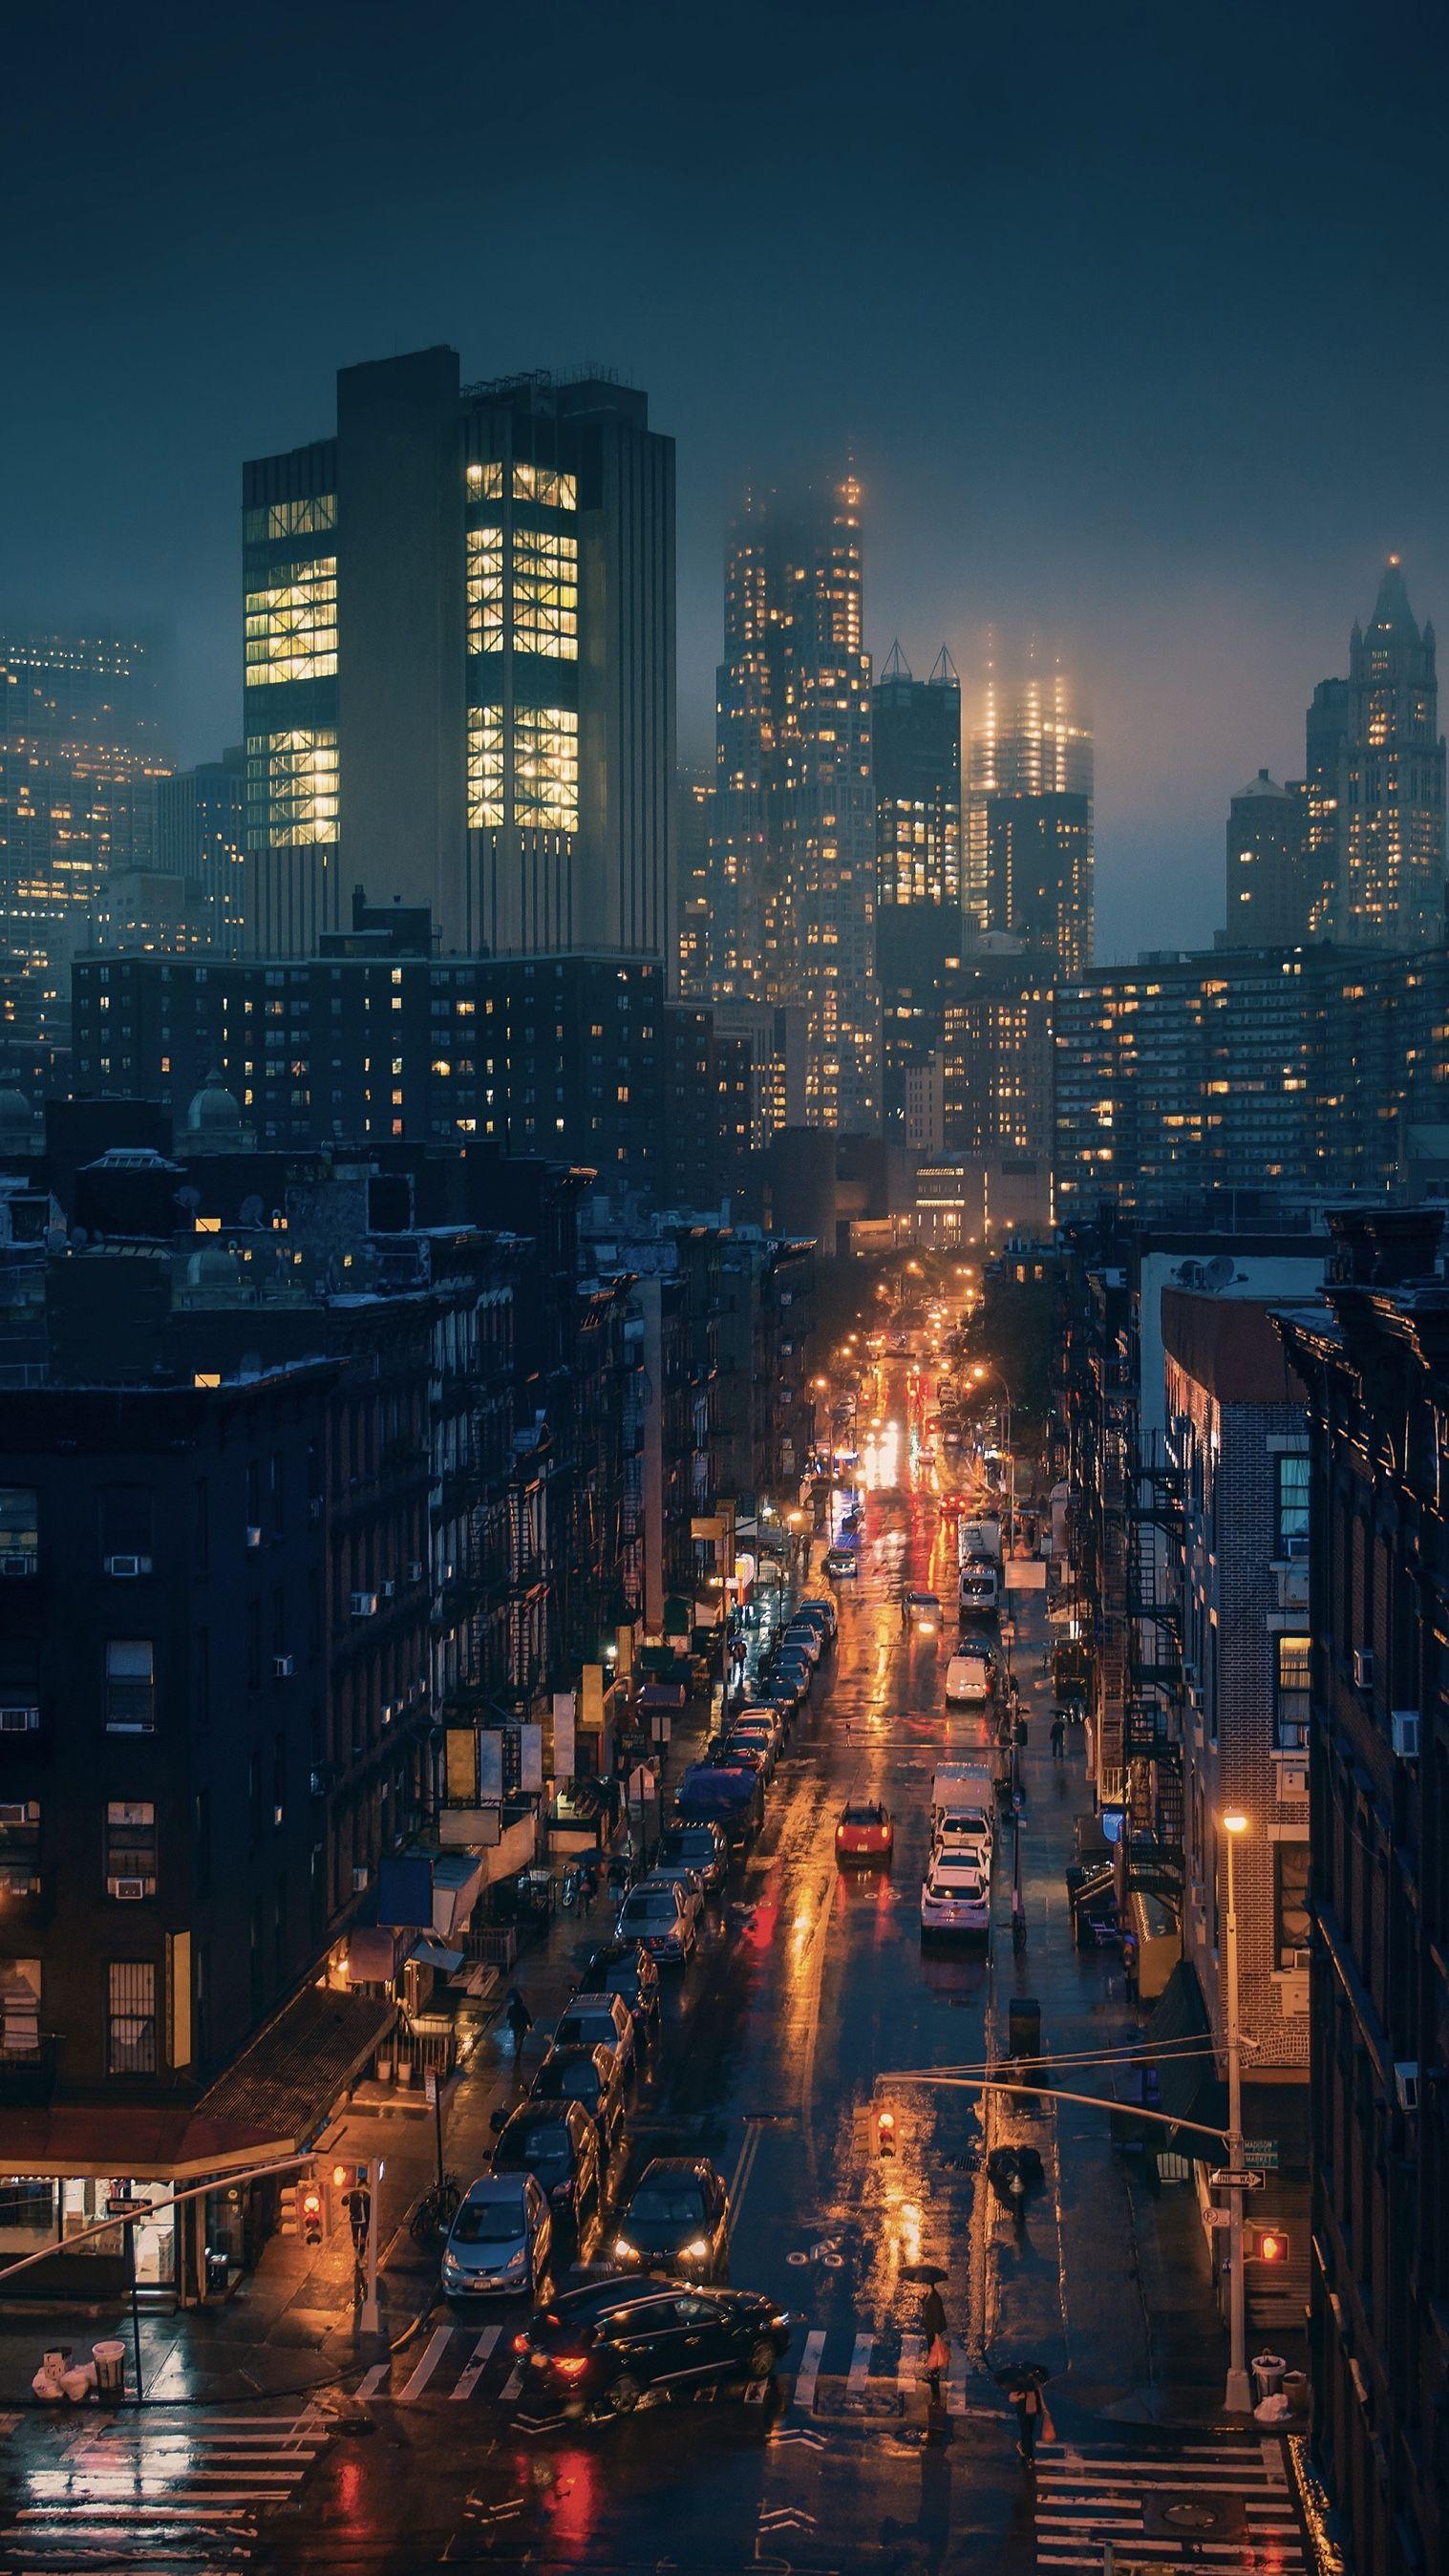 Rain Night City Wallpapers - Top Free Rain Night City Backgrounds ...